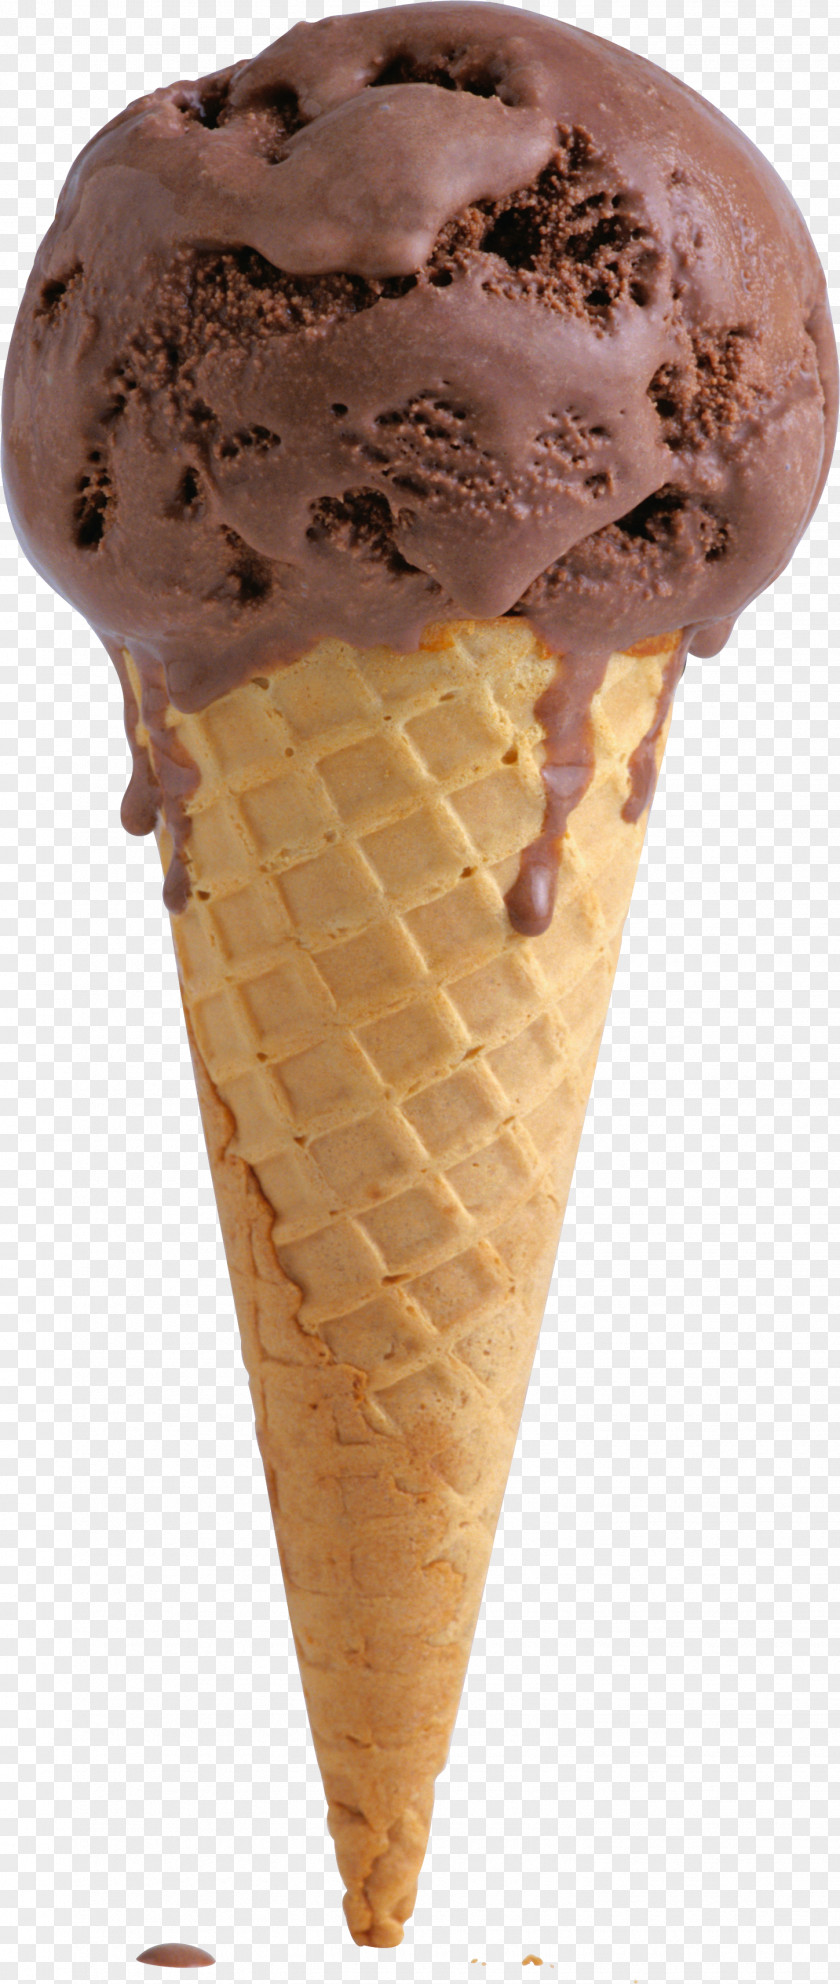 Chocolate Ice Cream Image Milkshake Cone PNG